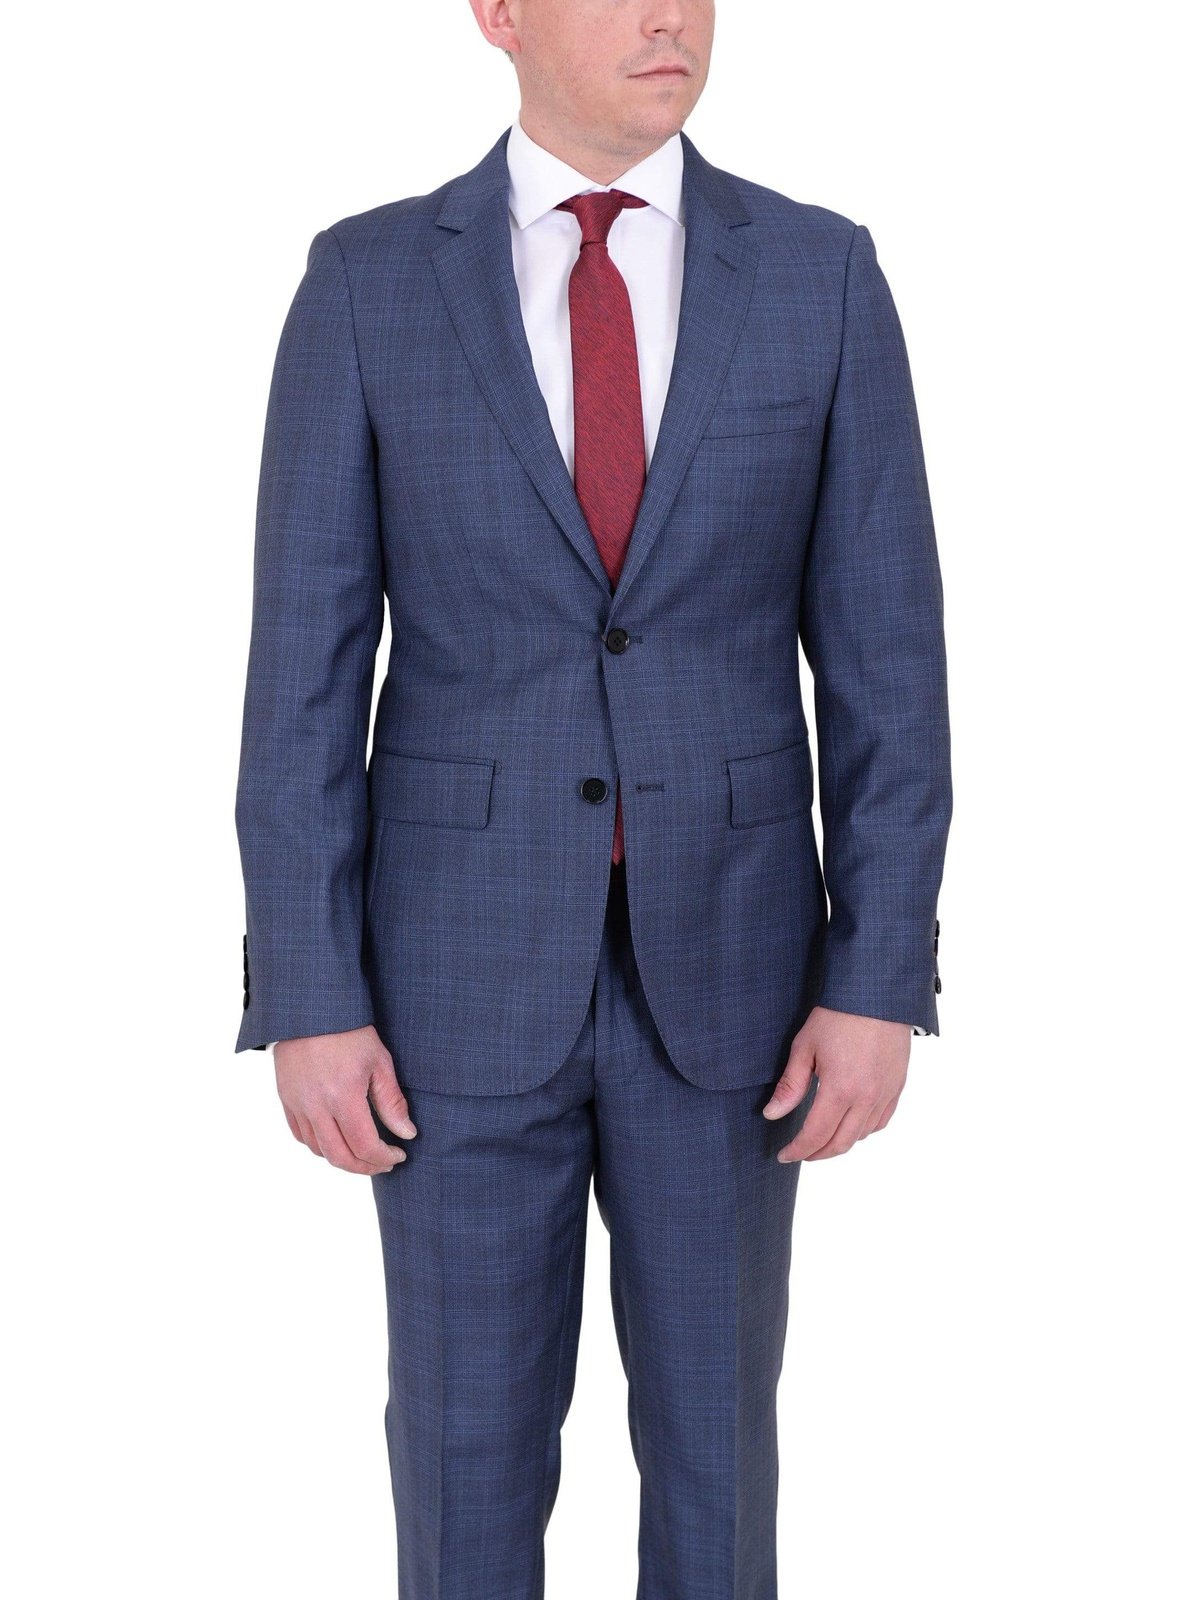 Label E TWO PIECE SUITS 38R Mens Modern Fit Medium Blue Plaid Two Button Wool Suit